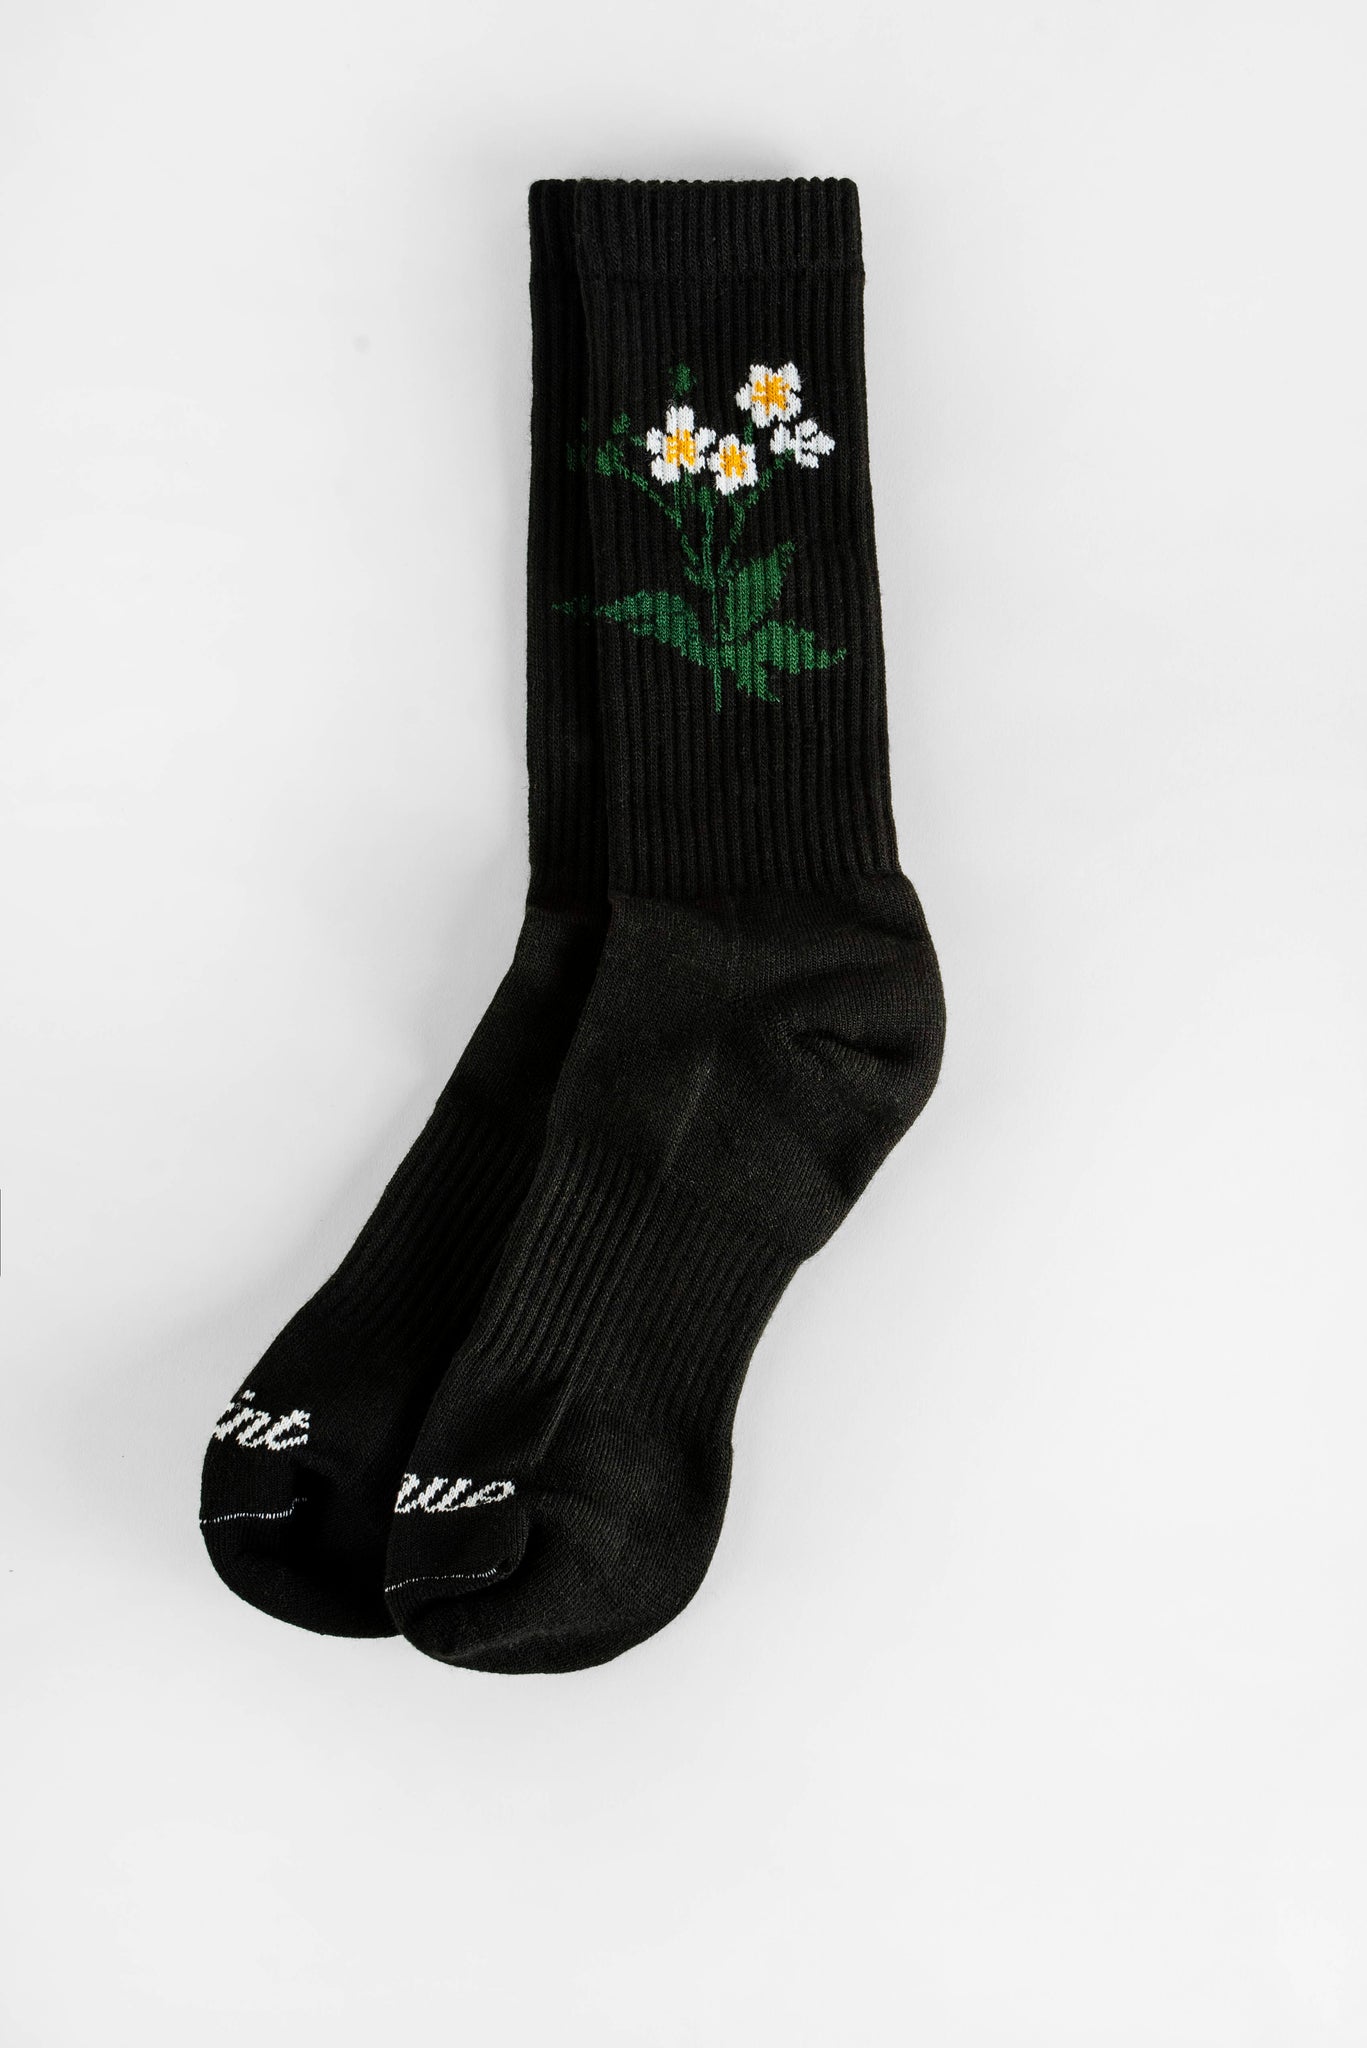 'Saints Garden' Crew Socks (Black)